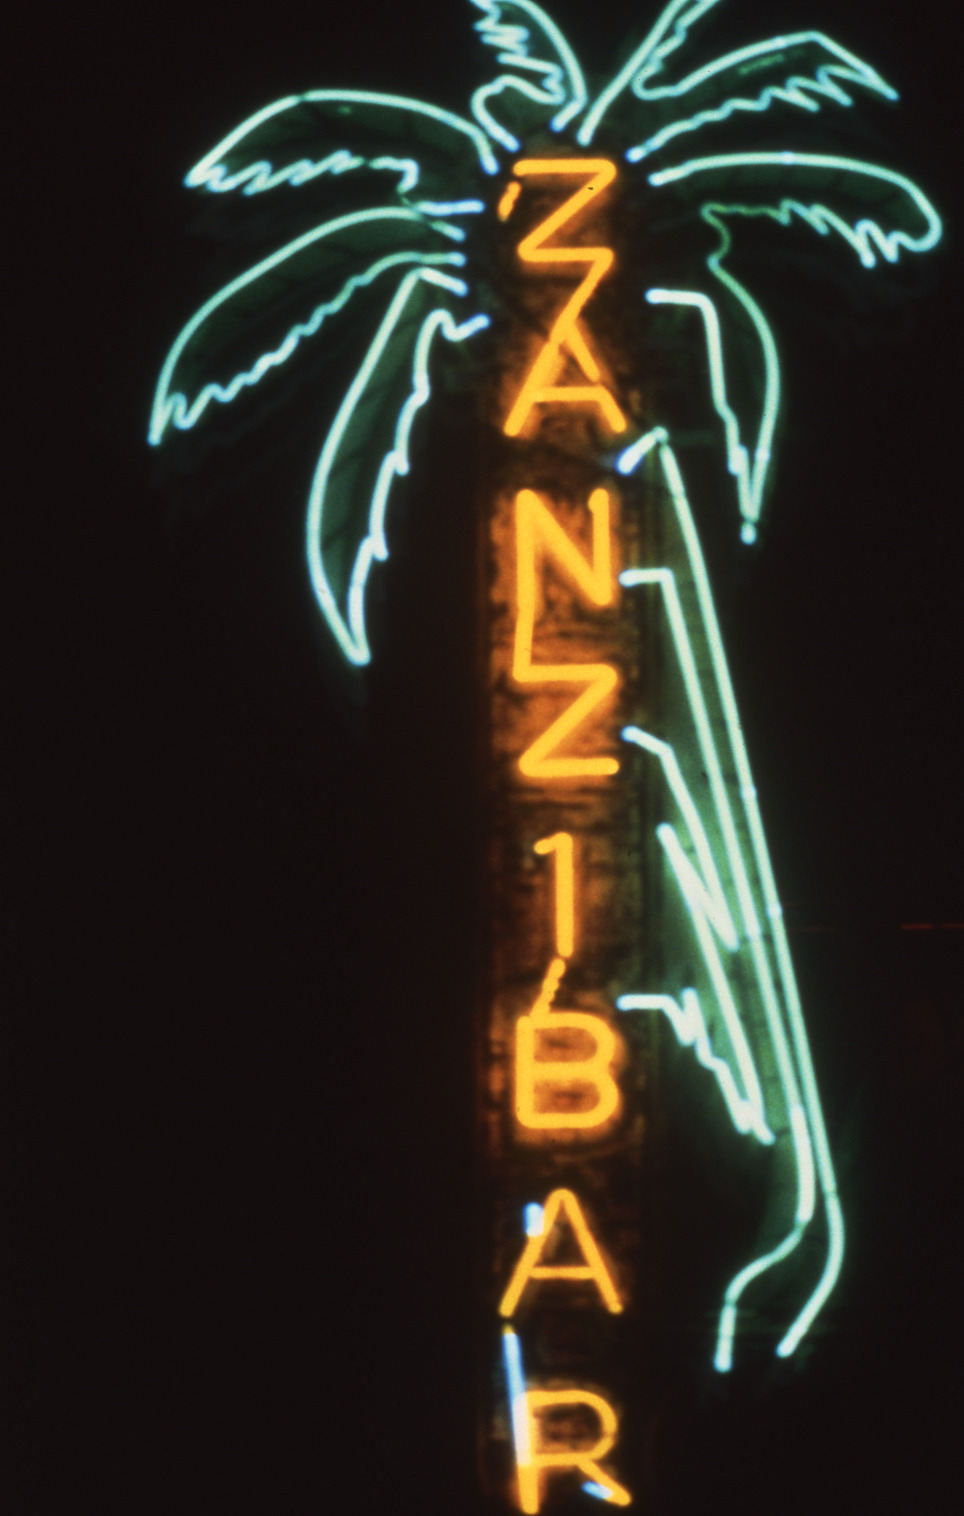 Zanzibar Lounge roof mounted sign, Reno, Nevada: photographic print